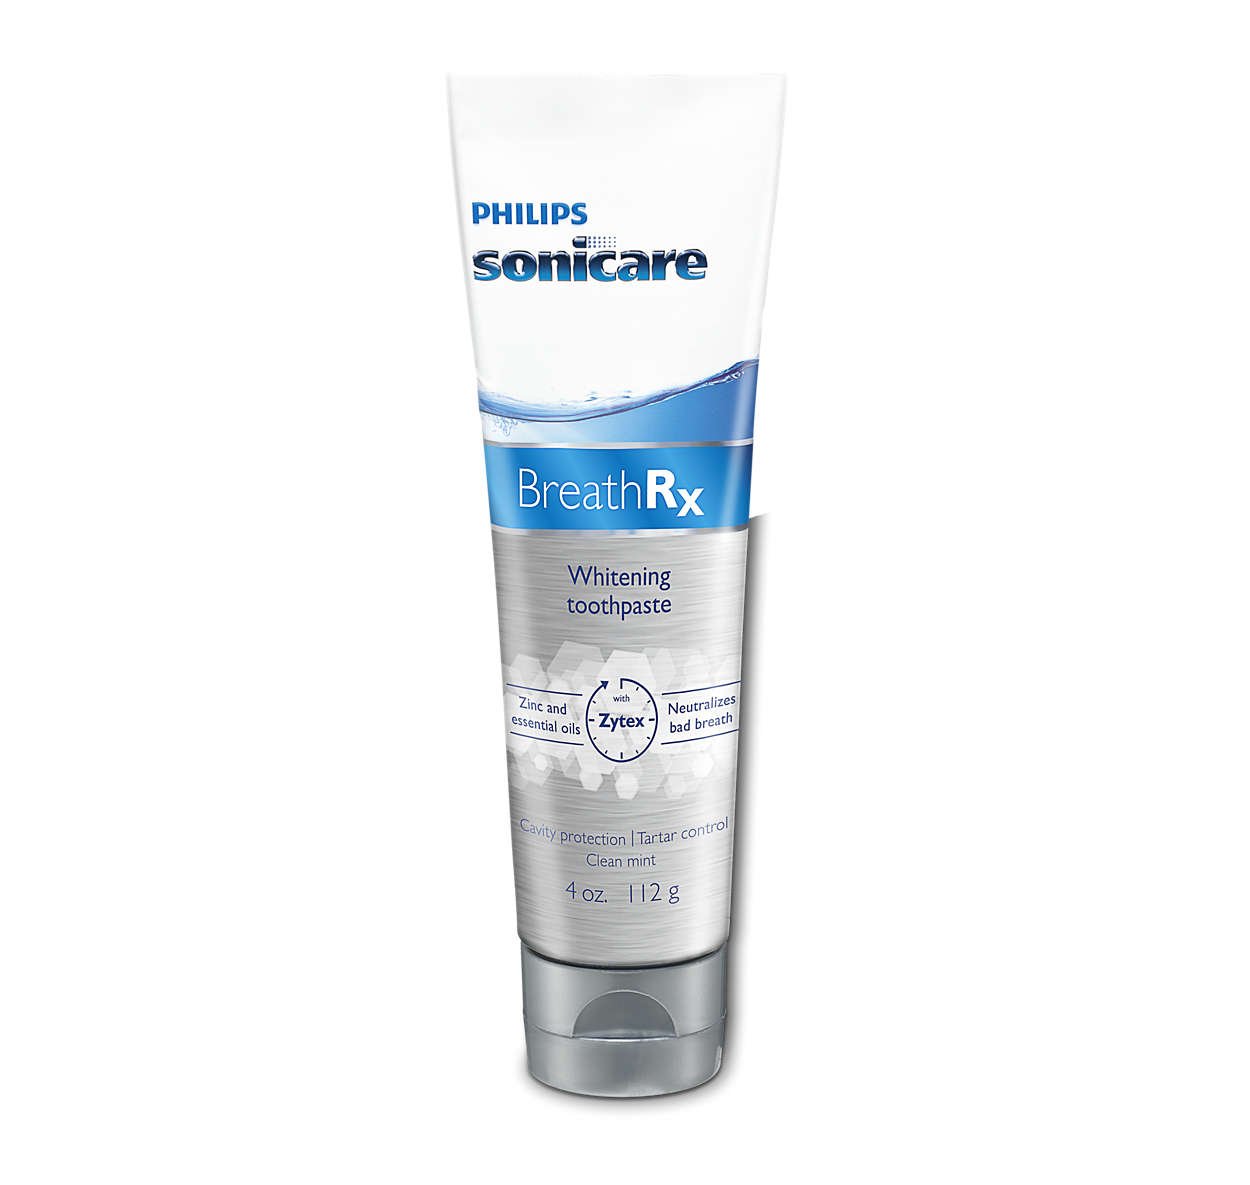 Philips Sonicare BreathRx Whitening Toothpaste